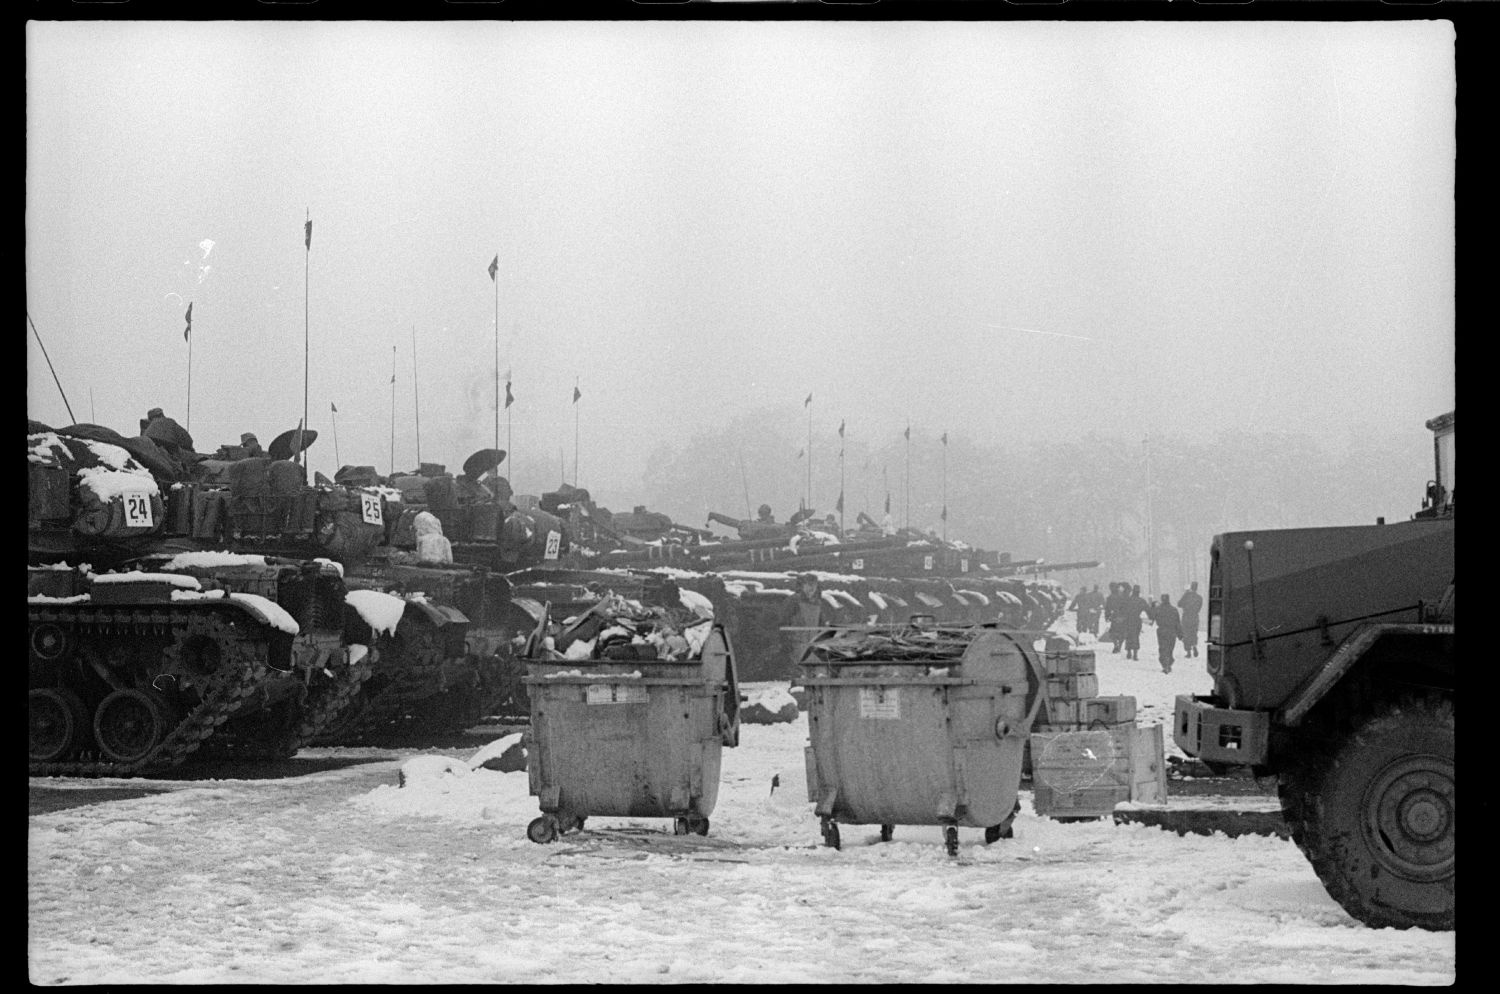 s/w-Fotografie: Truppenübung der U.S. Army Berlin Brigade in Bergen-Hohne in Niedersachsen